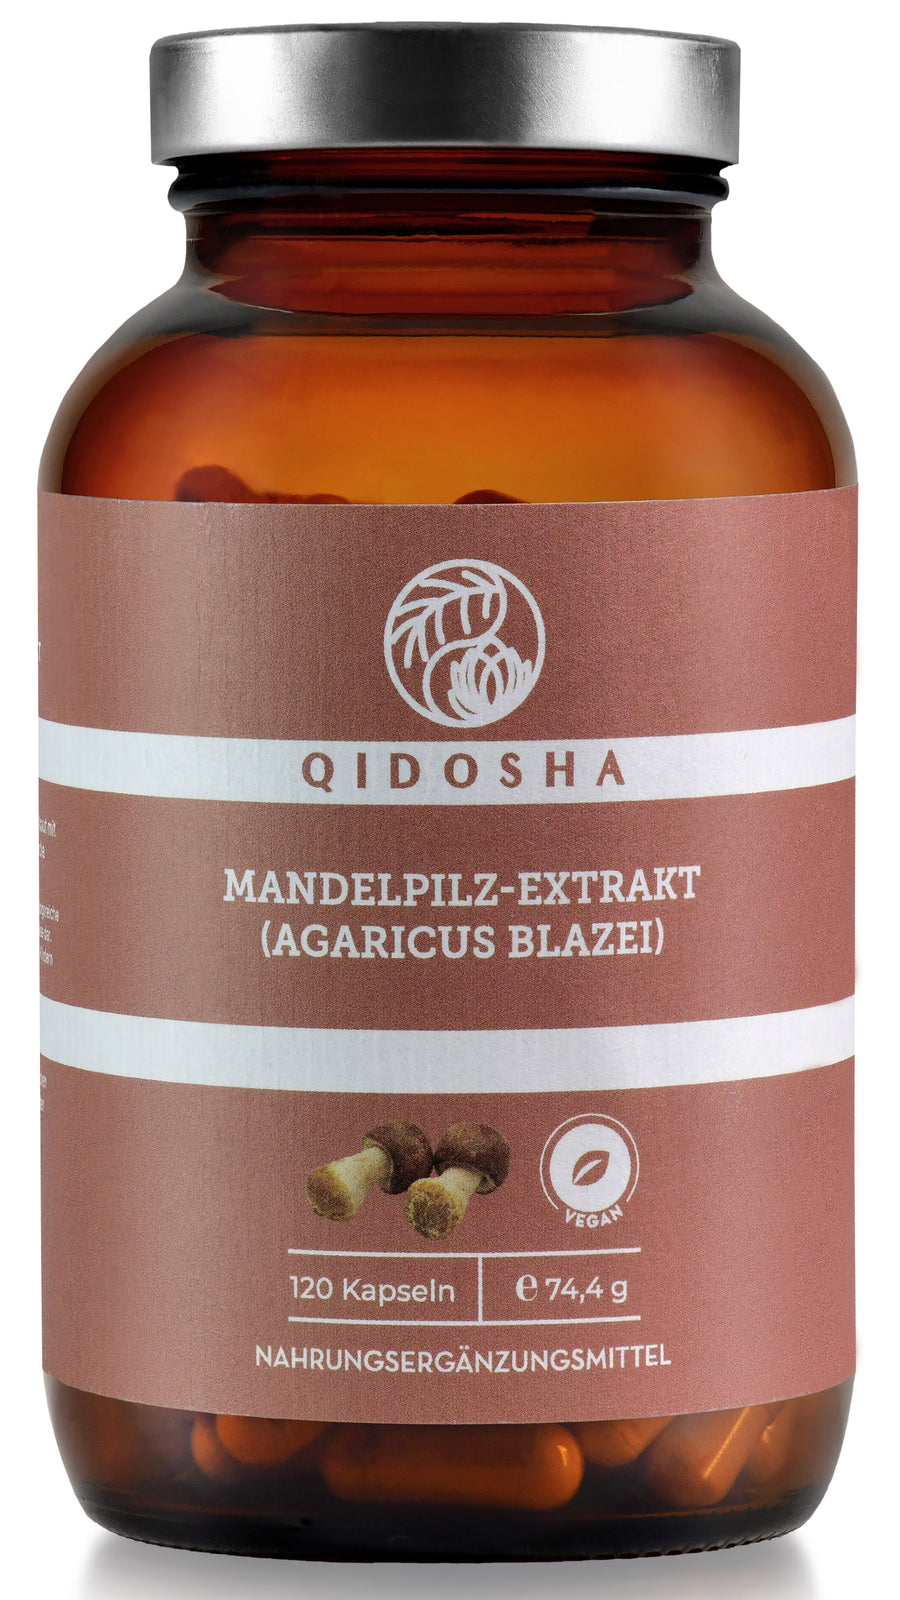 Mandelpilz-Extrakt (Agaricus blazei) im Glas